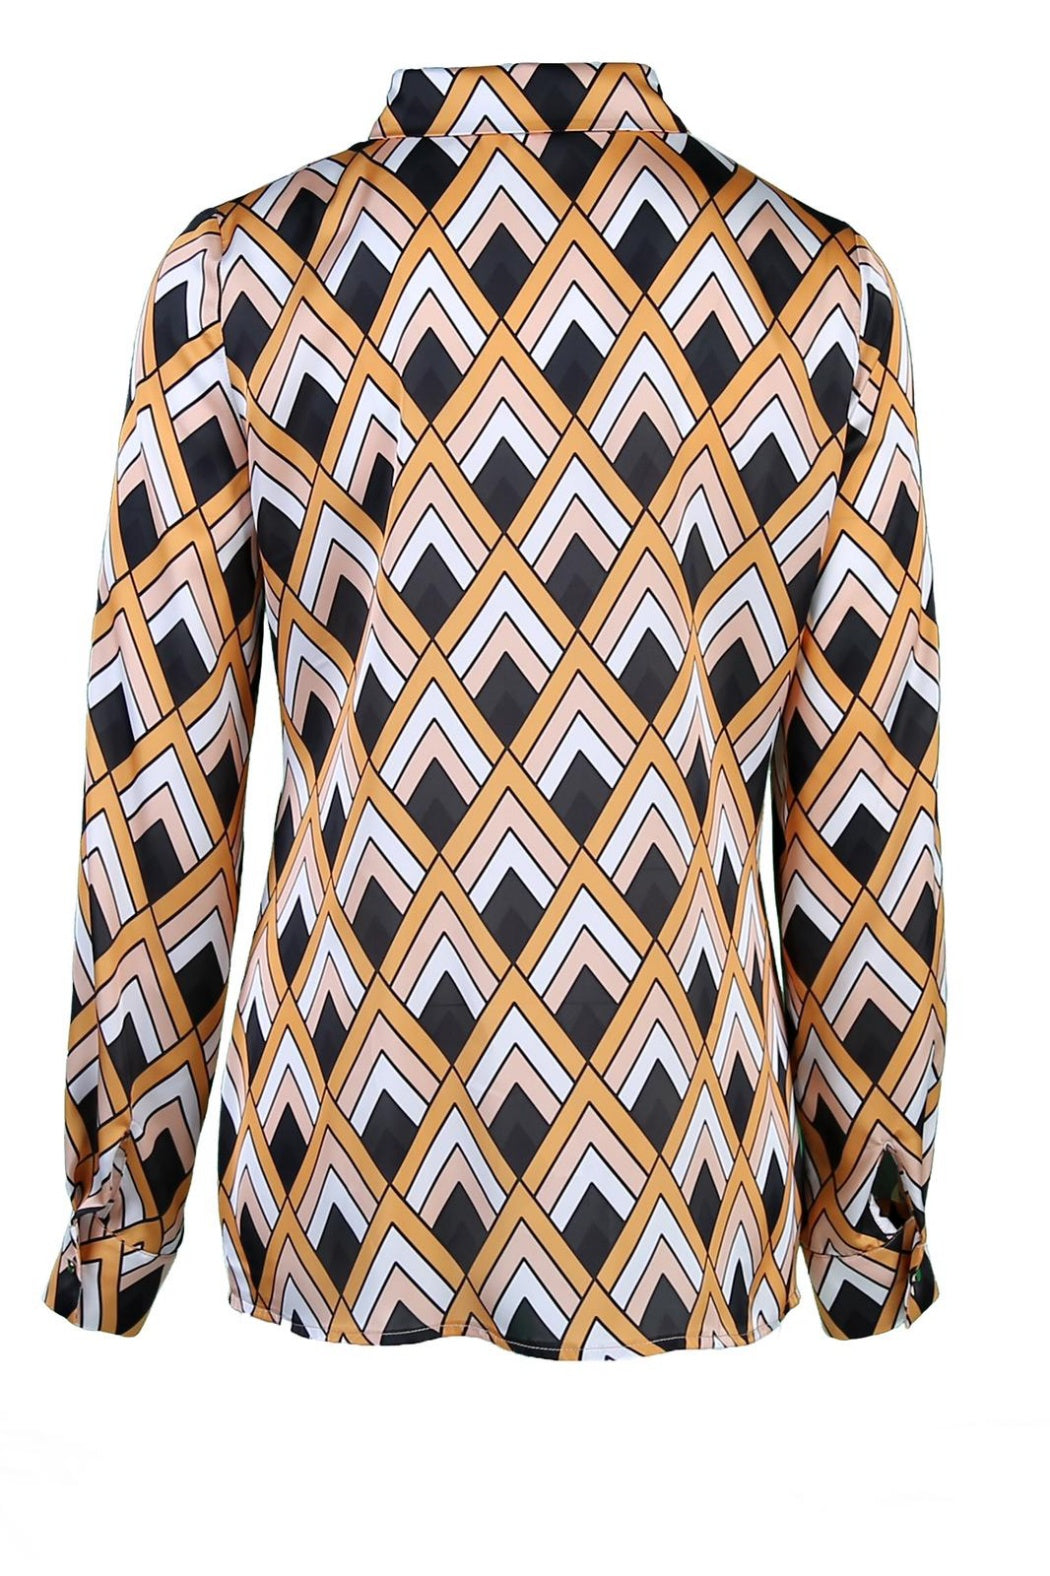 Eliza Yellow&Black&White Triangle Patterned Basic Model Satin Women's Shirt